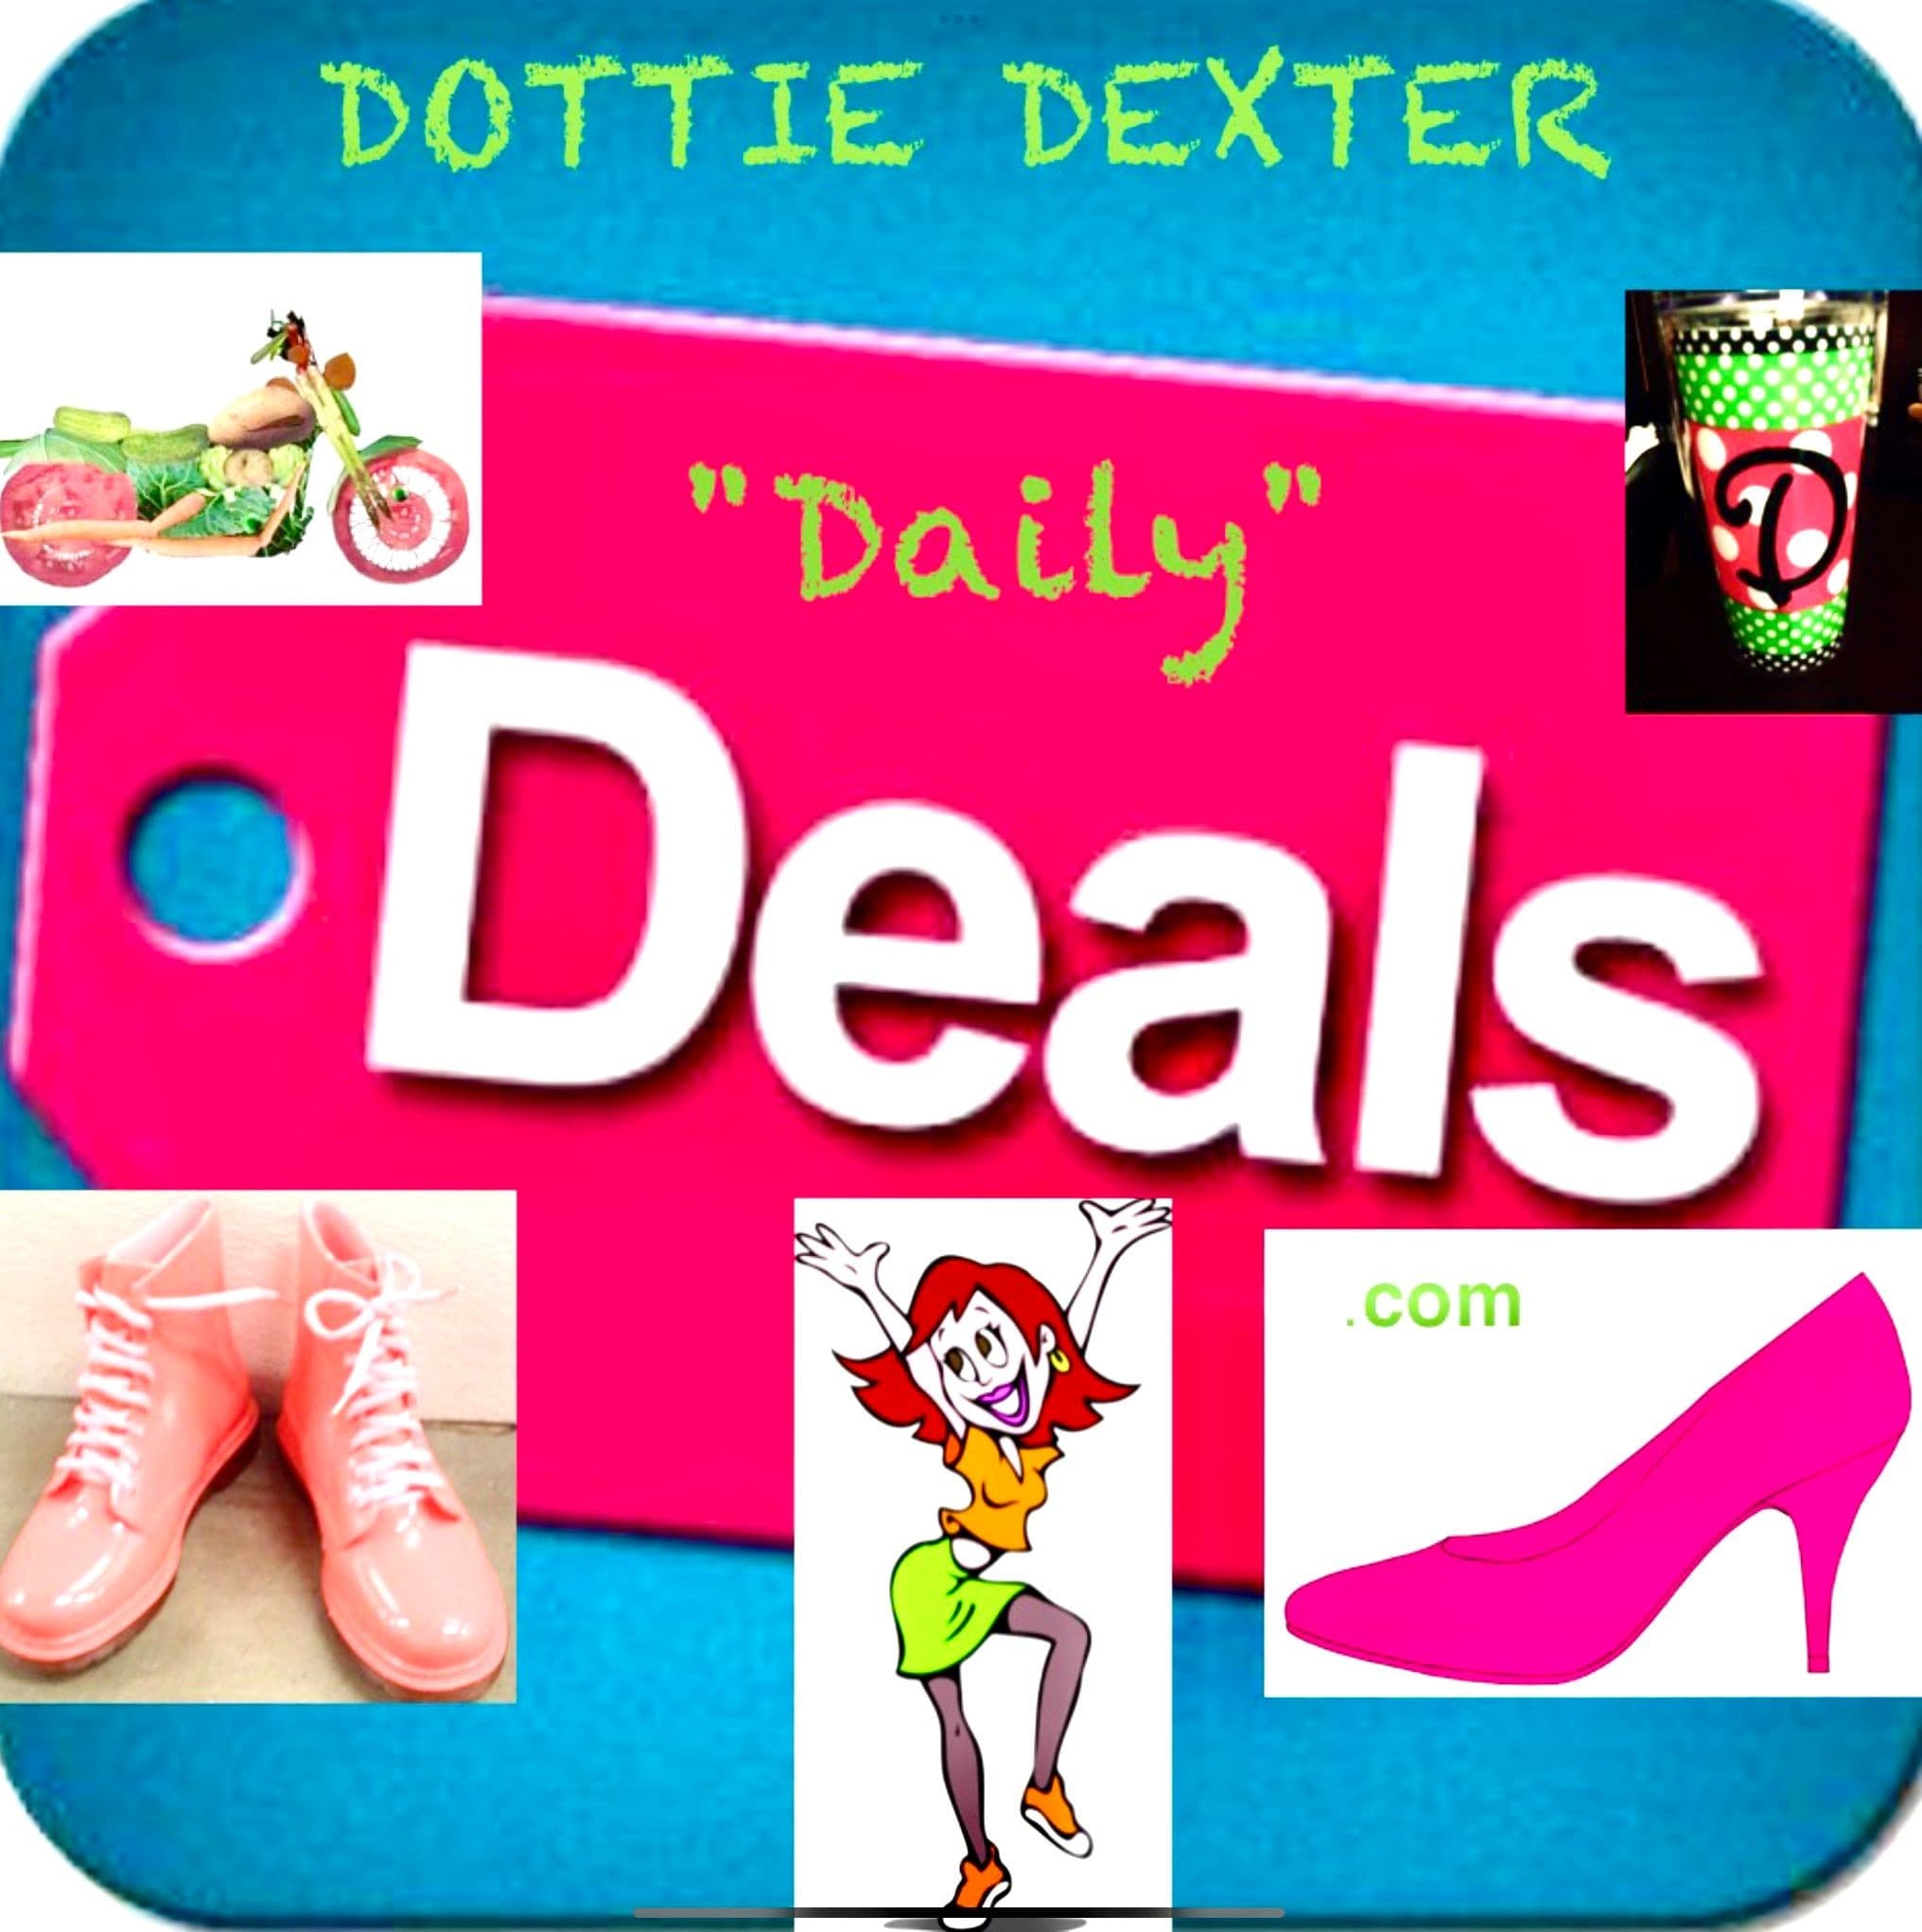 "Dottie Dexter Daily Deals" showcases new daily deals!